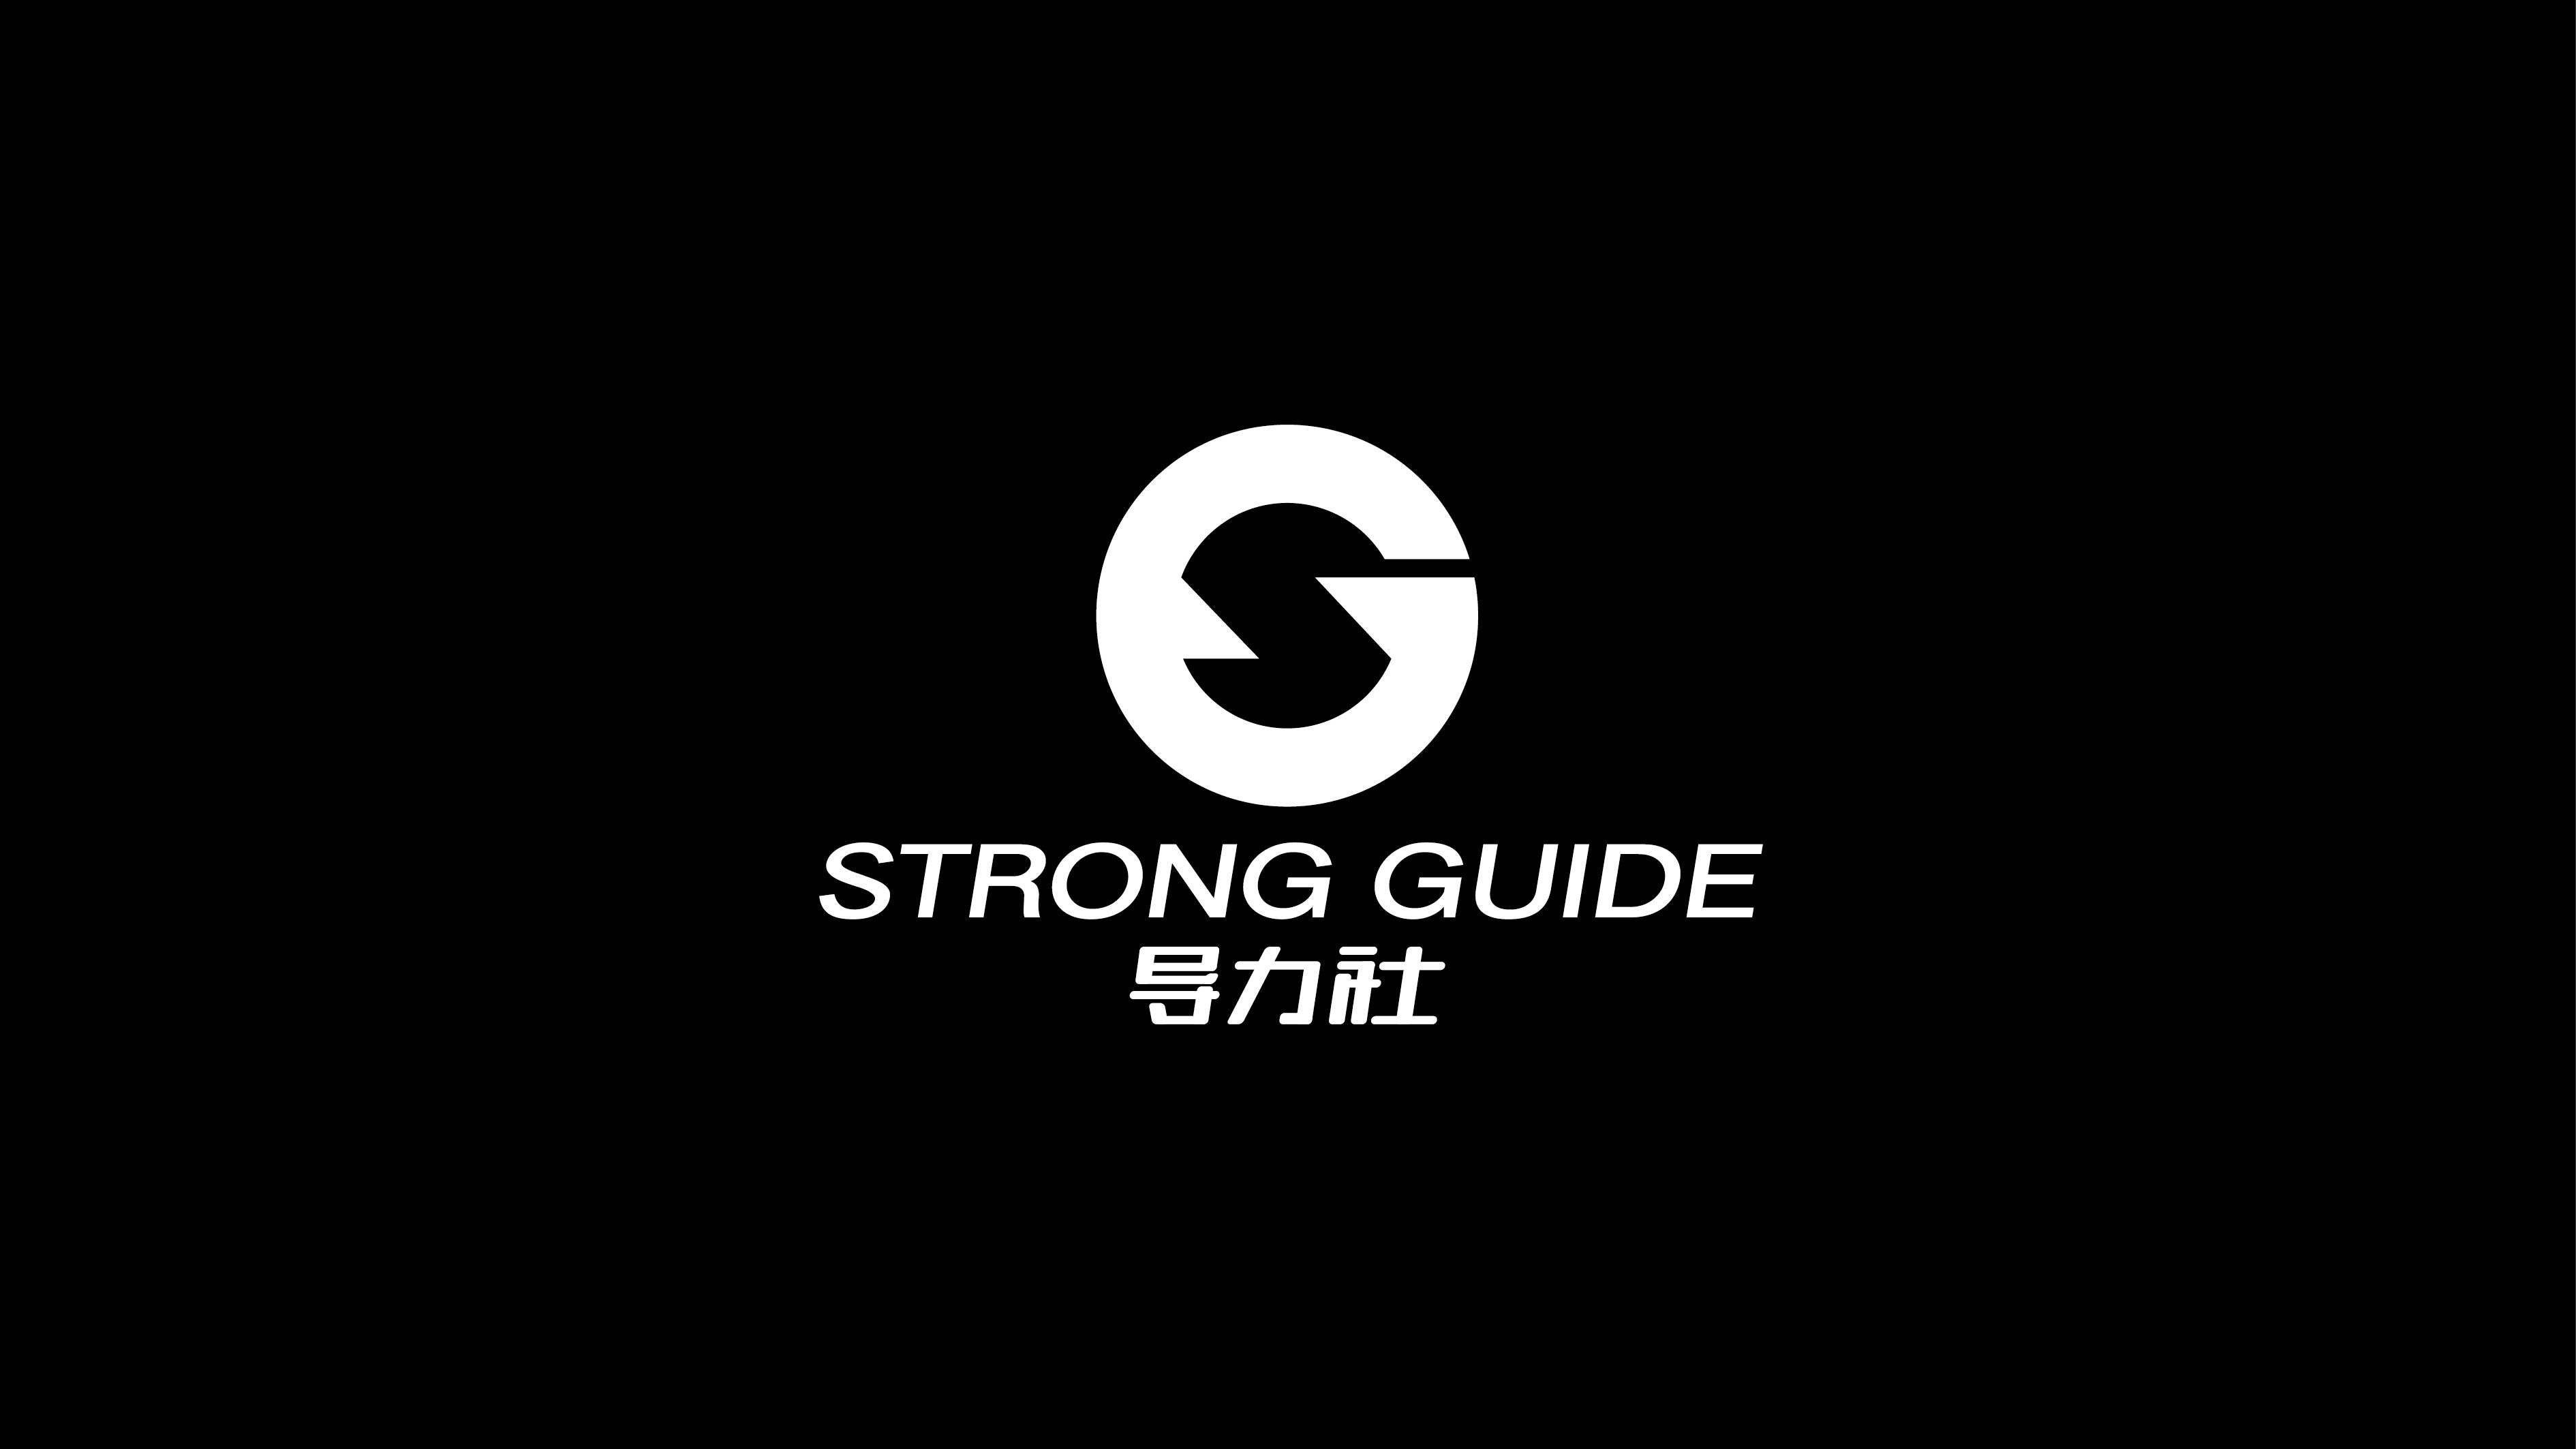 Strong Guide 導力社LOGO設計